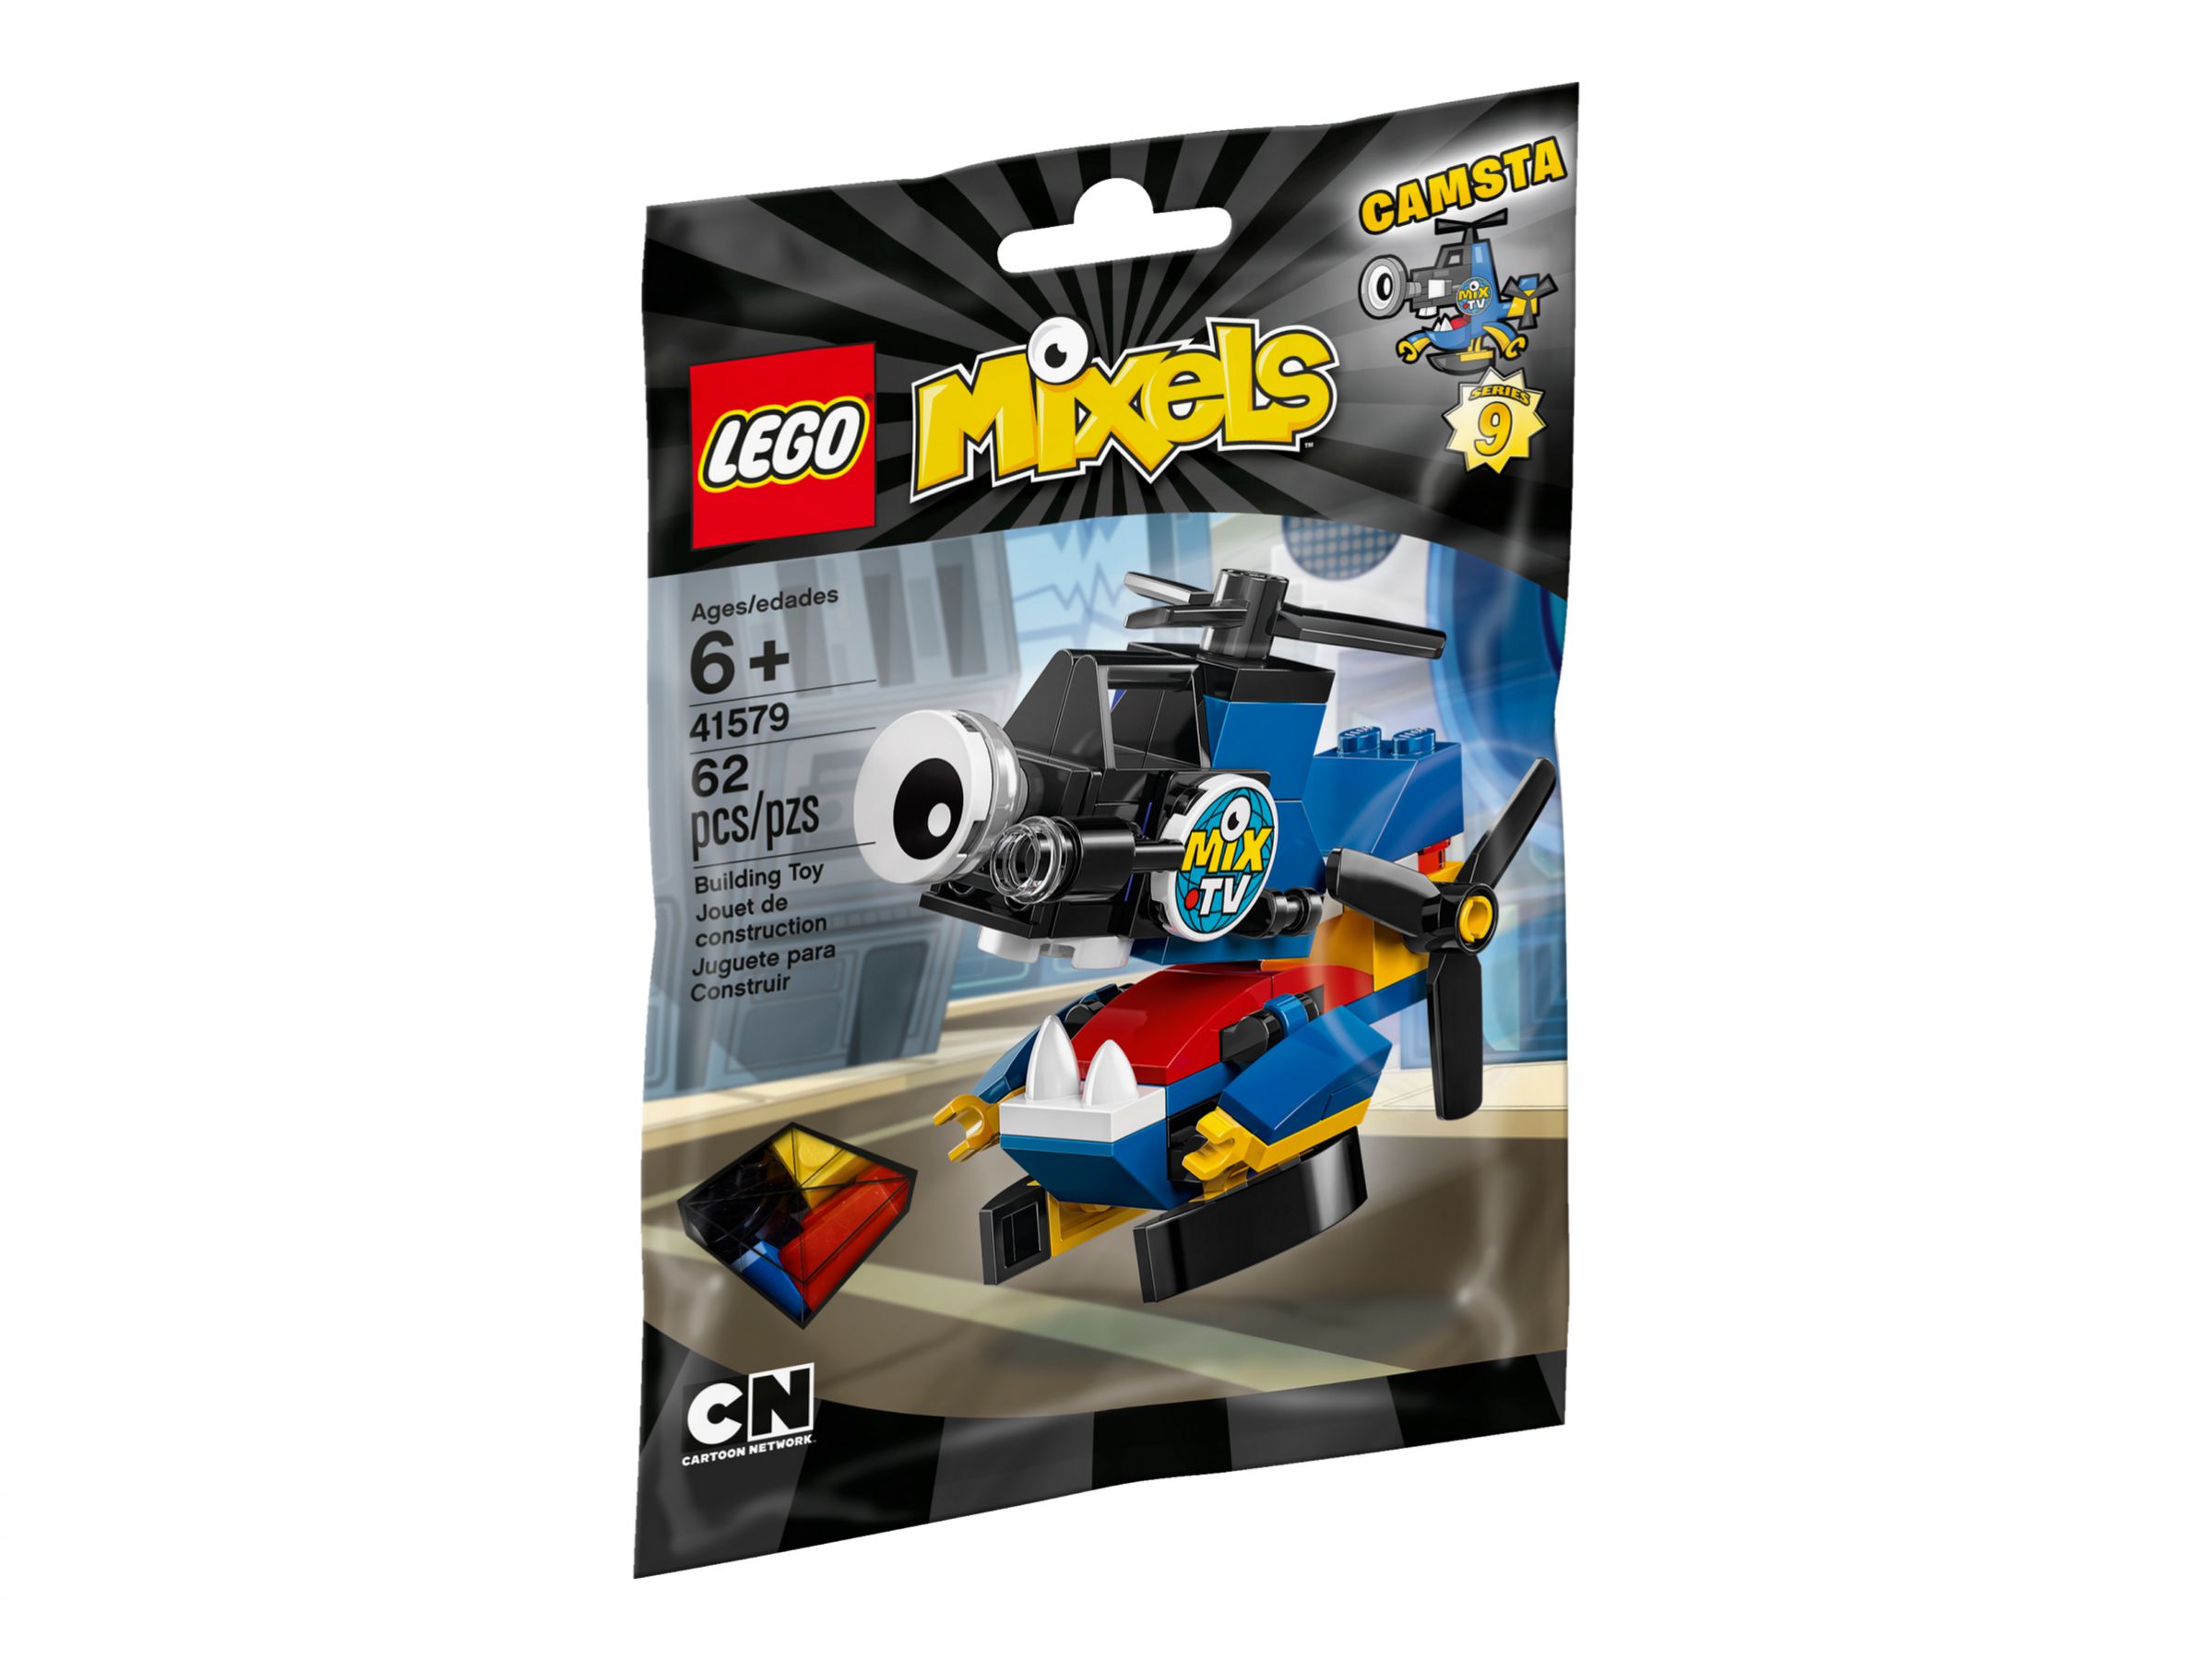 LEGO Mixels 41579 Camsta LEGO_41579_alt1.jpg